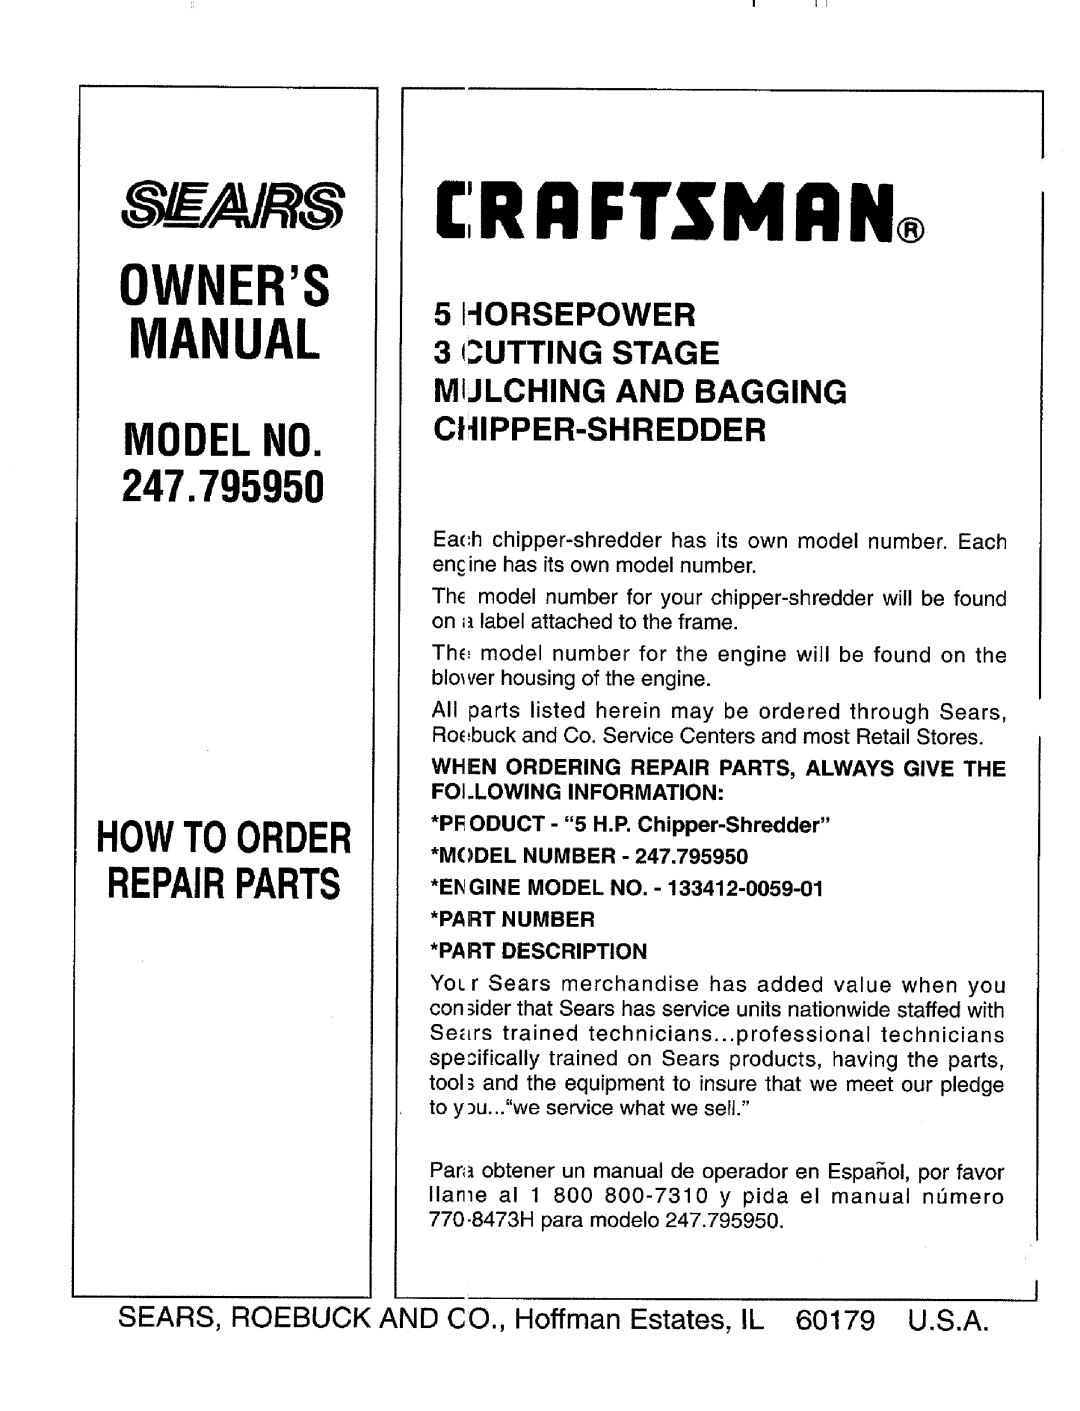 Craftsman 247.795950 manual 5HORSEPOWER, MIJLCHING AND BAGGING CltlPPER-SHREDDER, I Rrftsmrn, Owners, Manual, Cutting Stage 